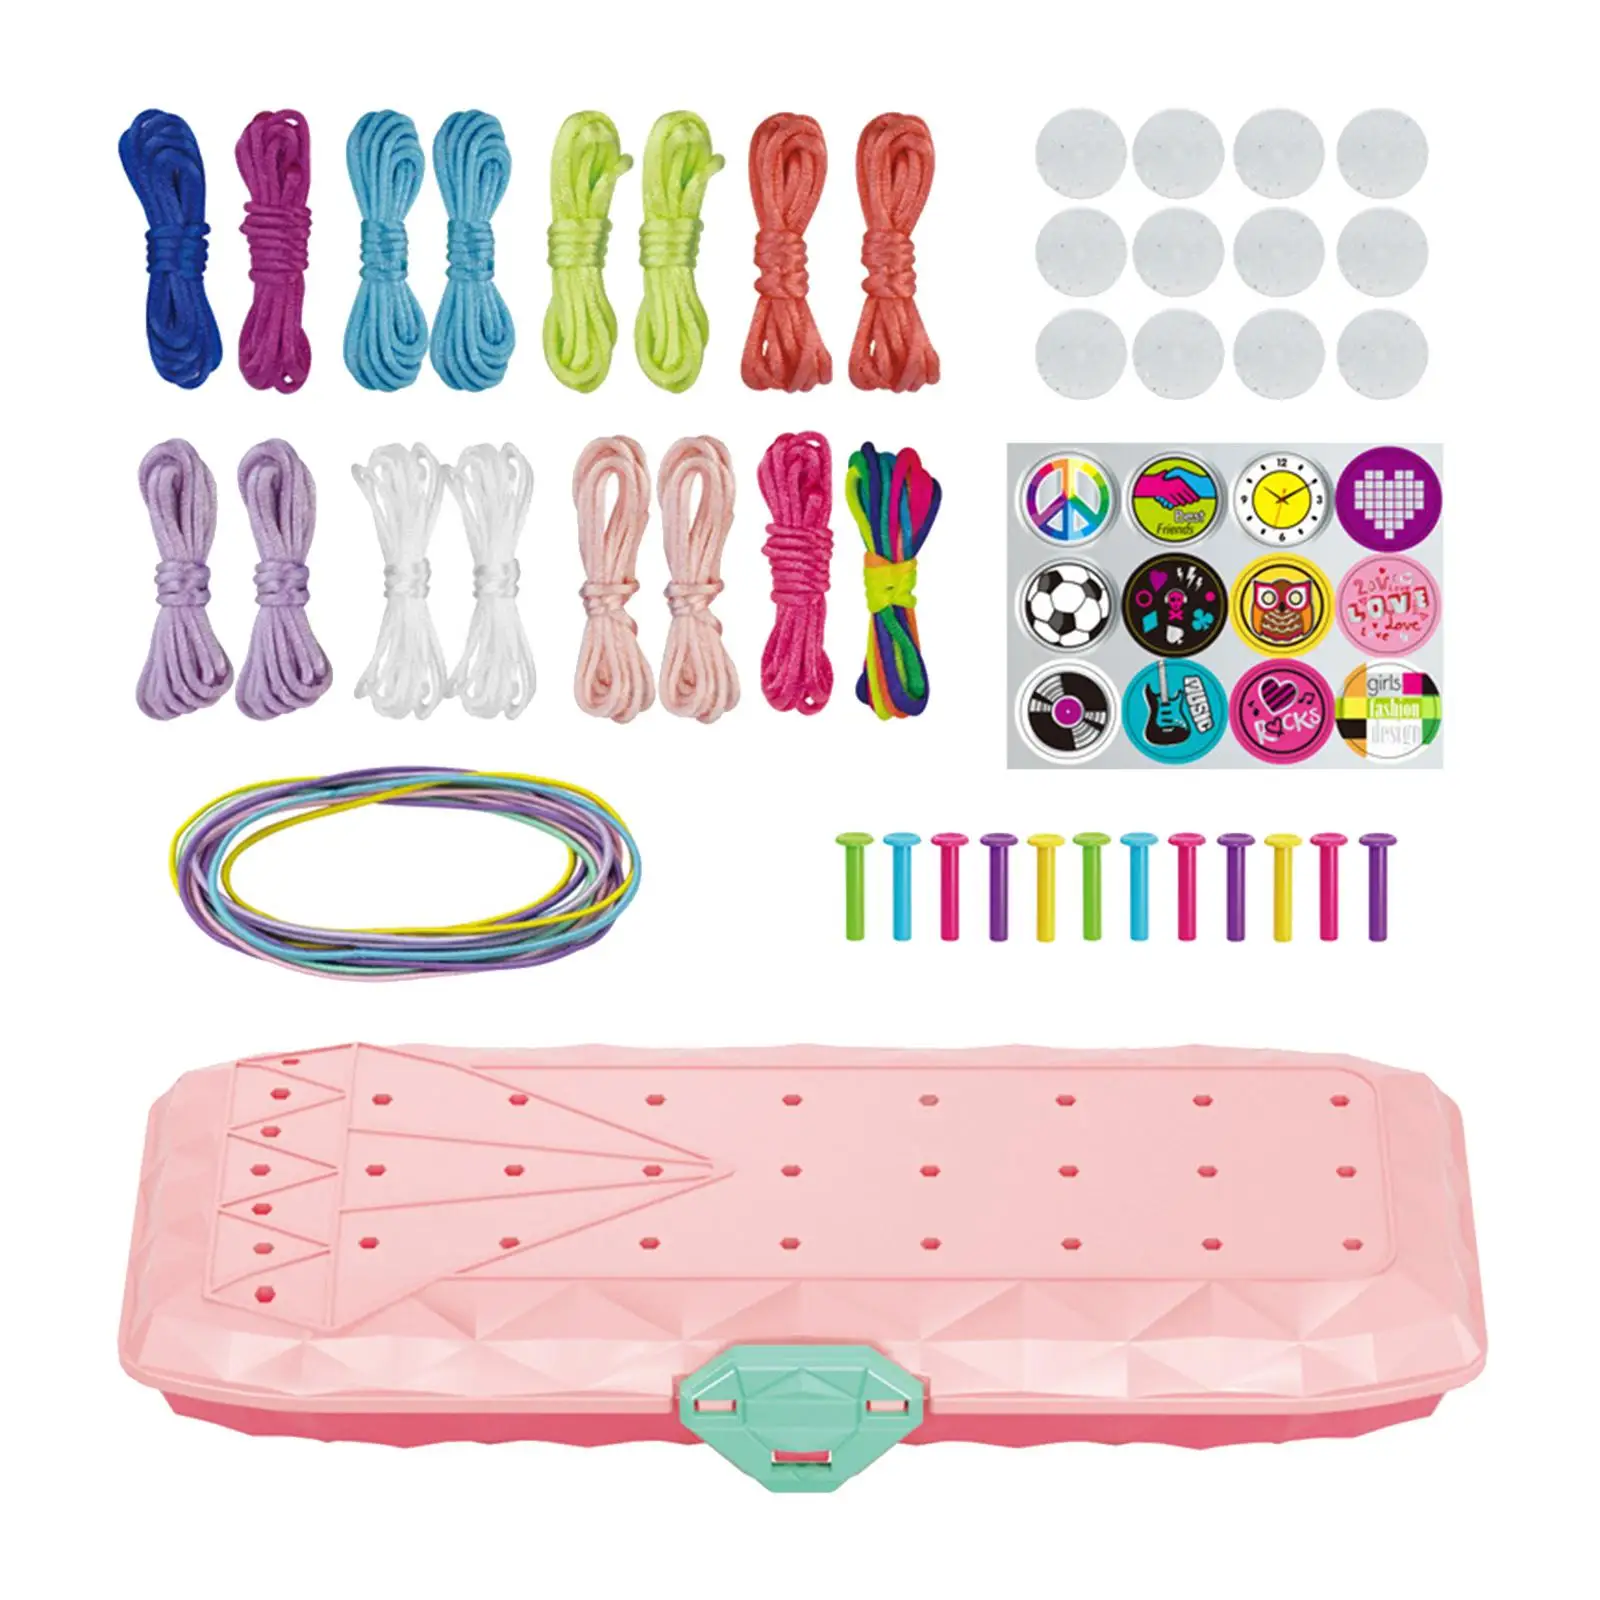 Bracelet Making Set Multicolored Bracelet Kit for Beginners Adults Women